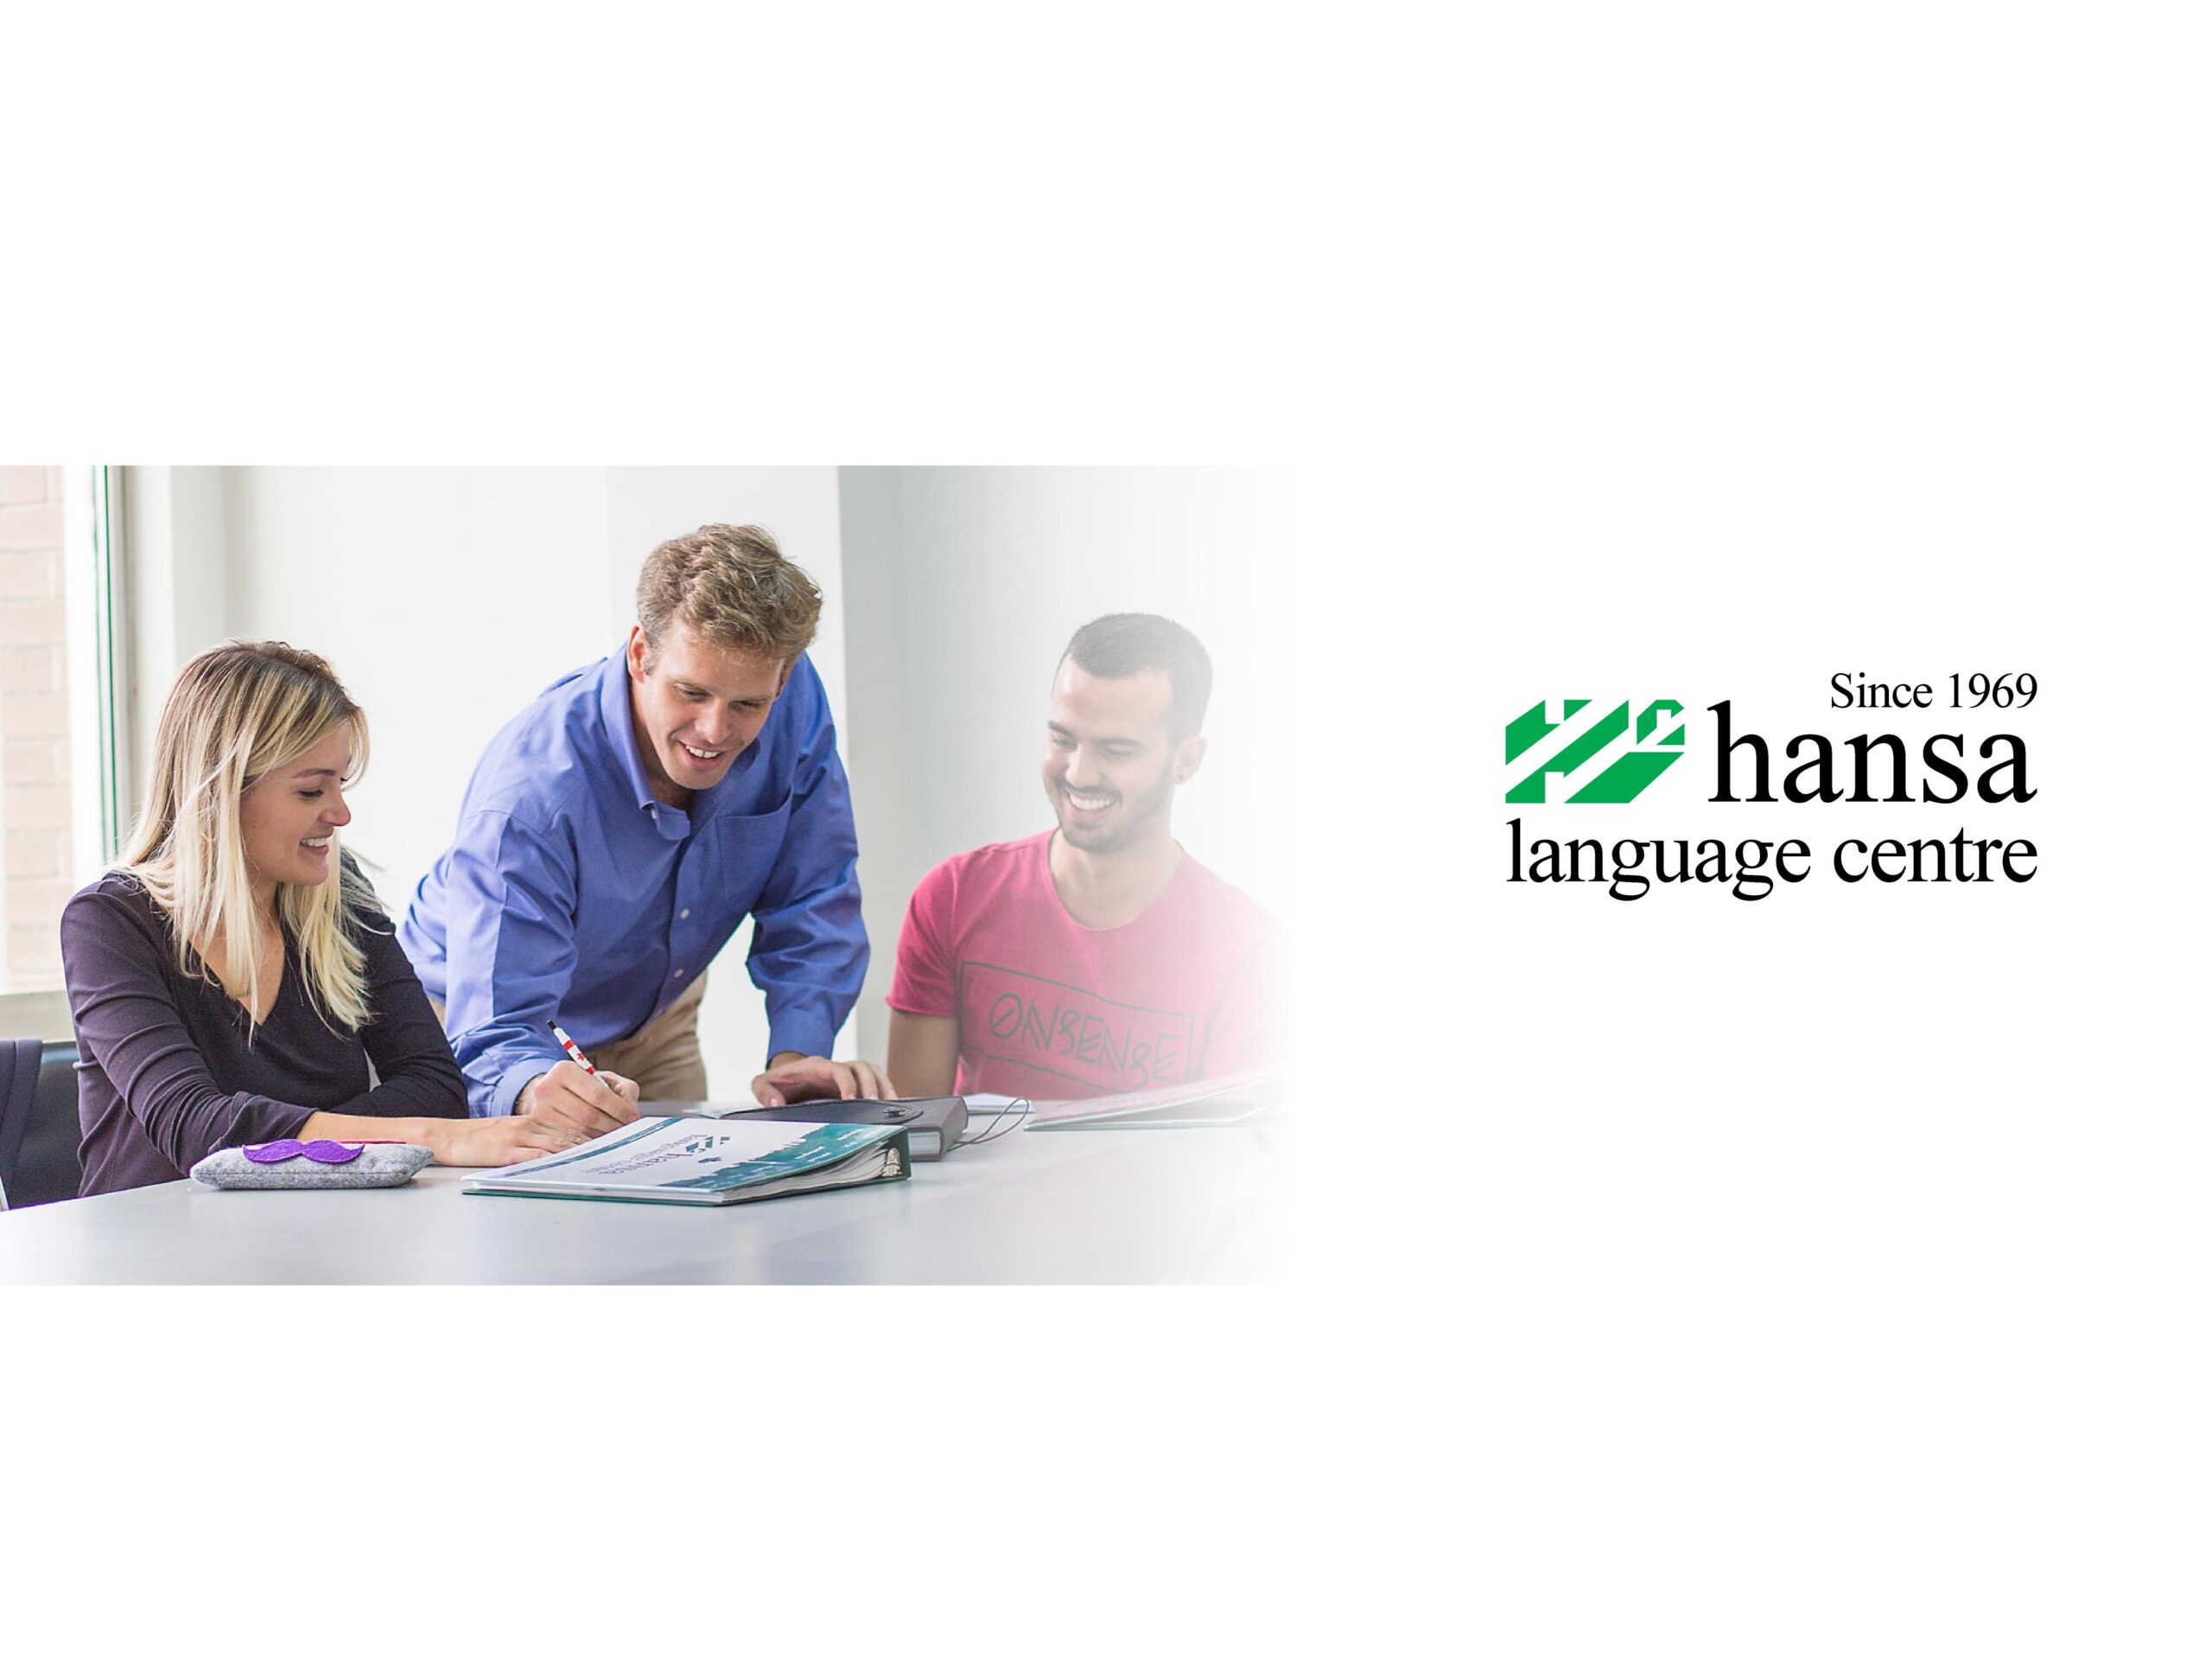 Hansa Language Centre logo & Hansa teacher with Hansa students in a classroom